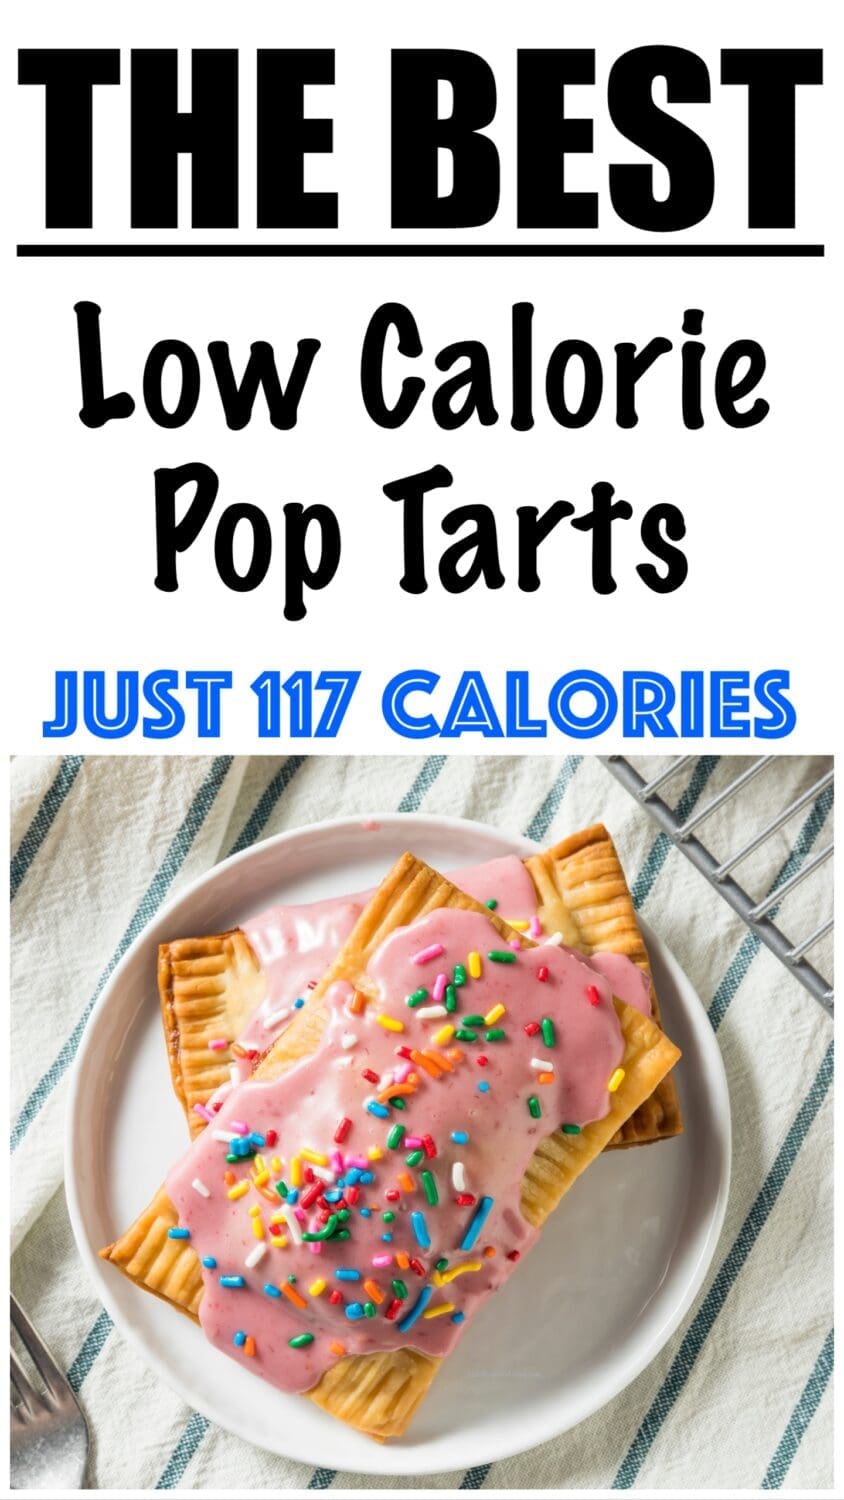 Low Calorie Pop Tarts Recipe